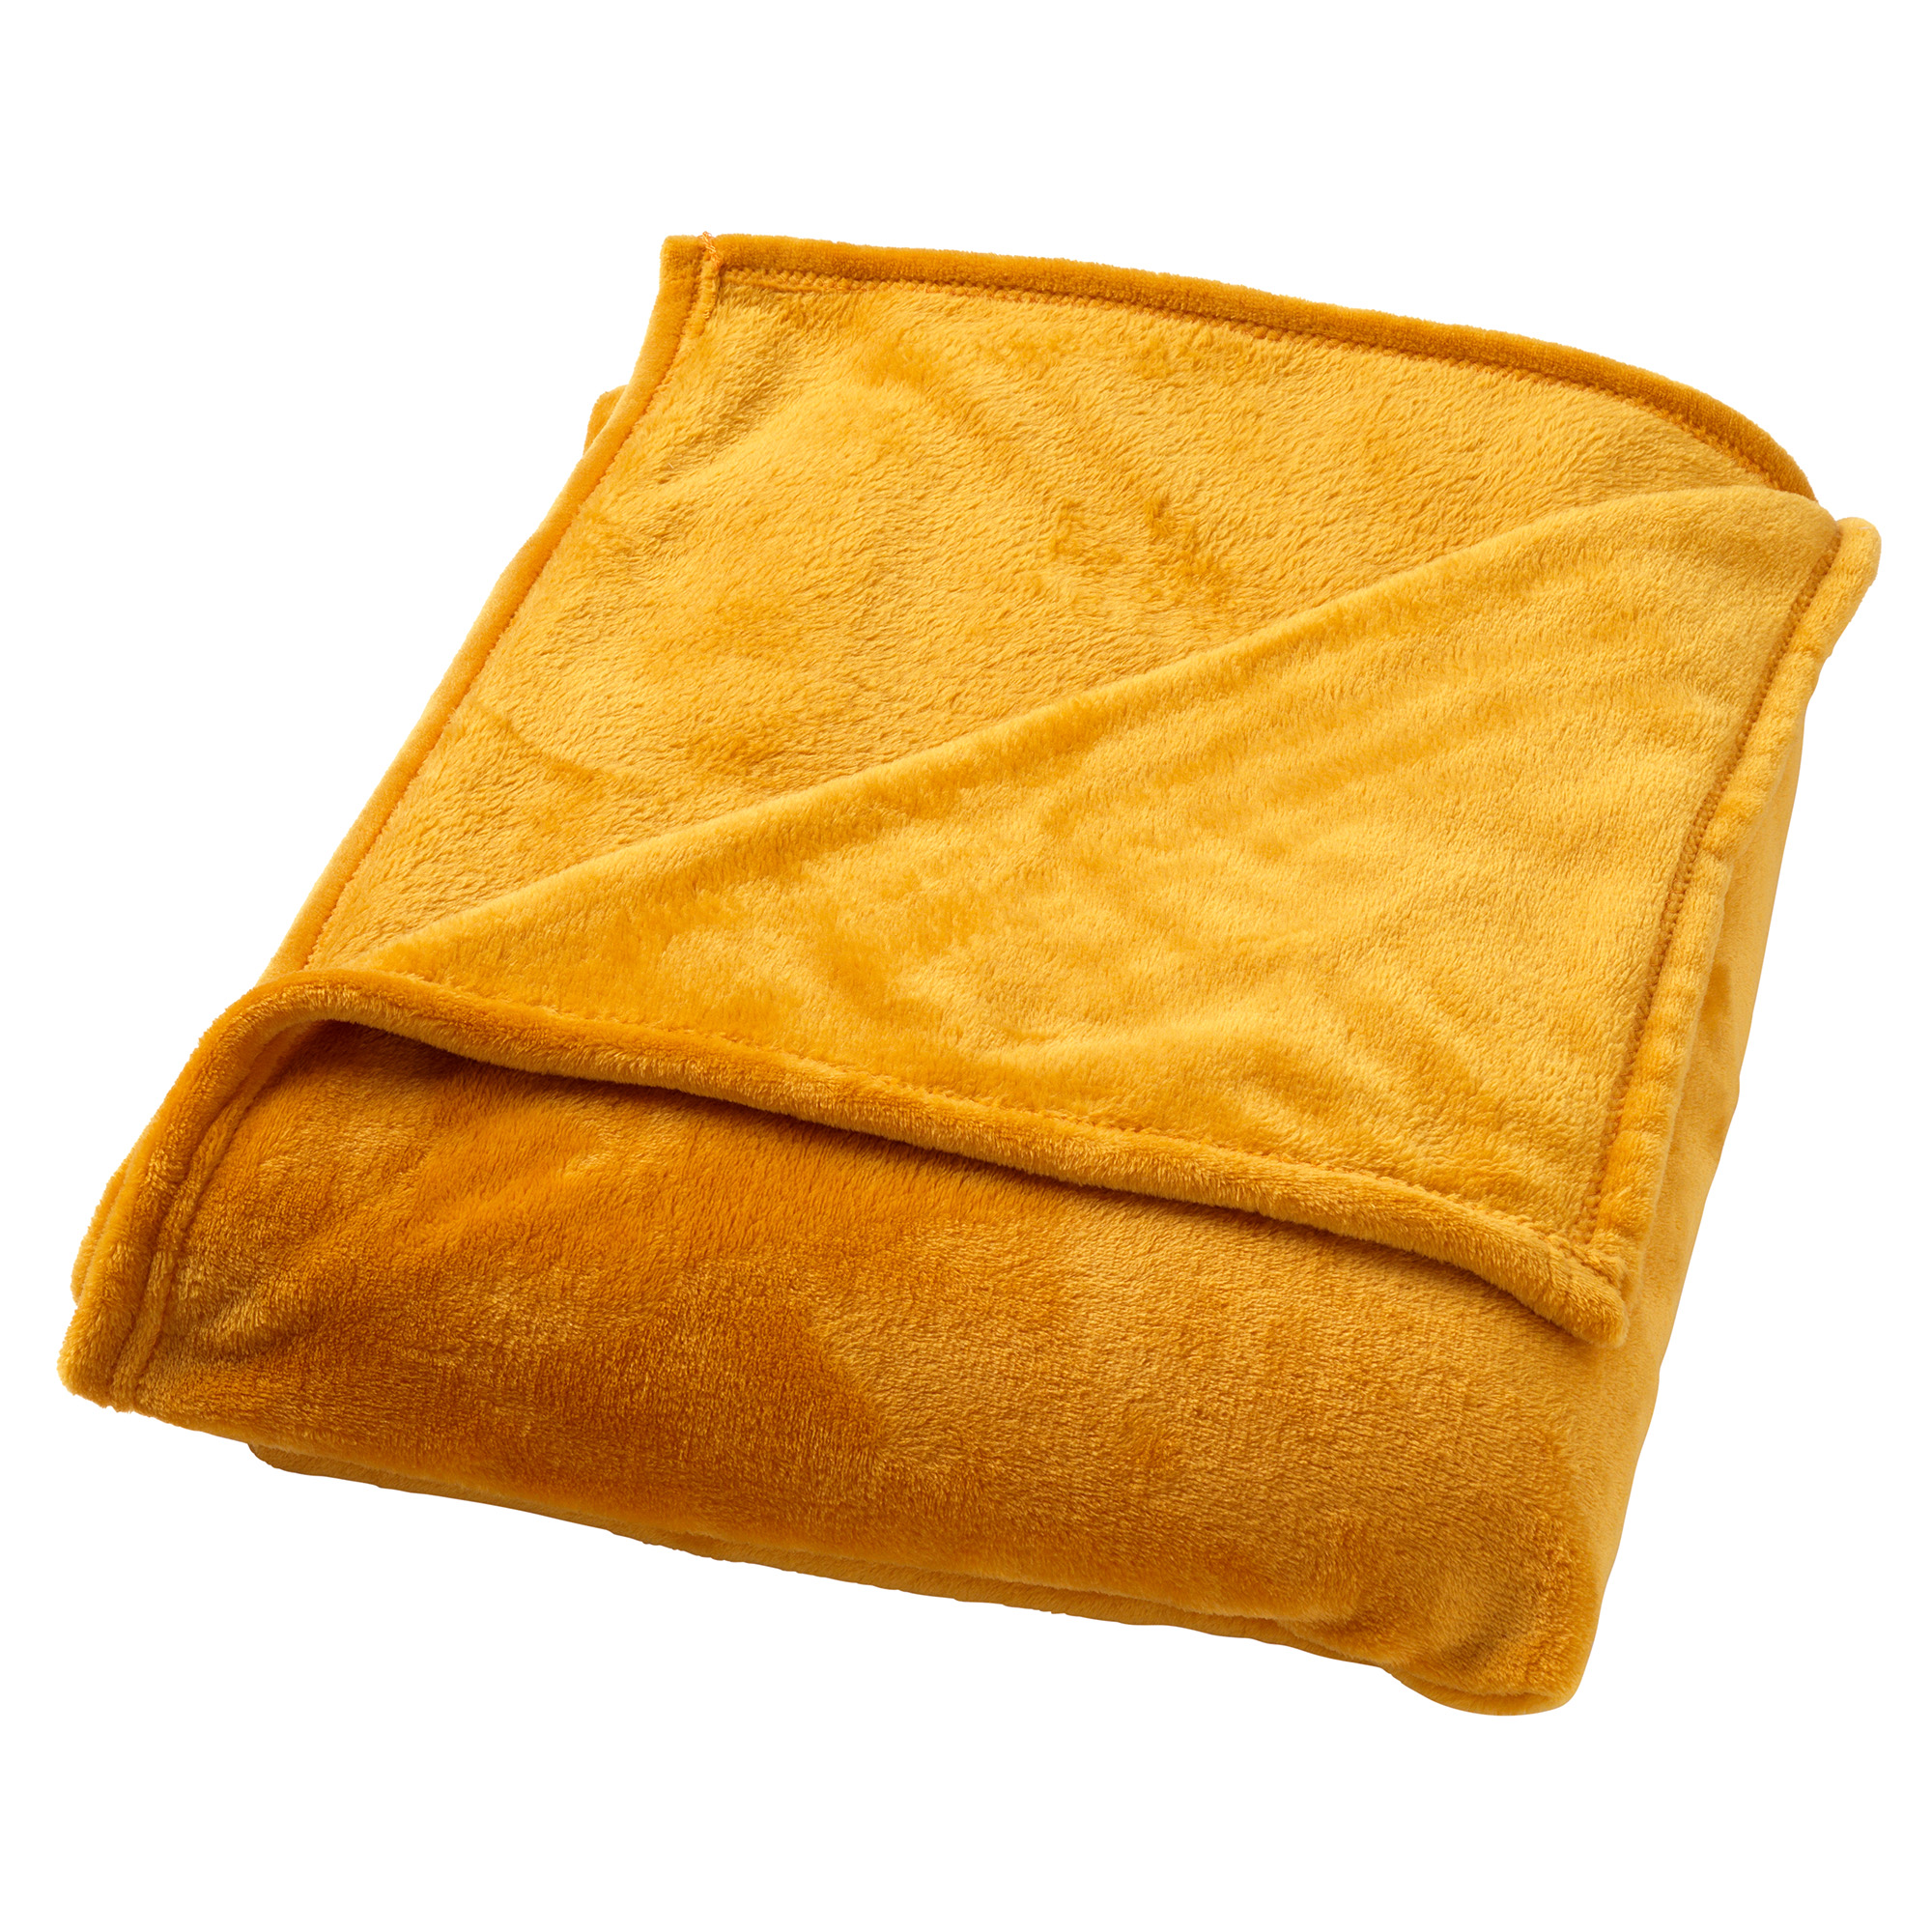 Score vriendelijke groet Etna CHARLIE - Plaid flannel fleece XL - 200x220 cm - Golden Glow - geel | Plaid  | DDL0910200323